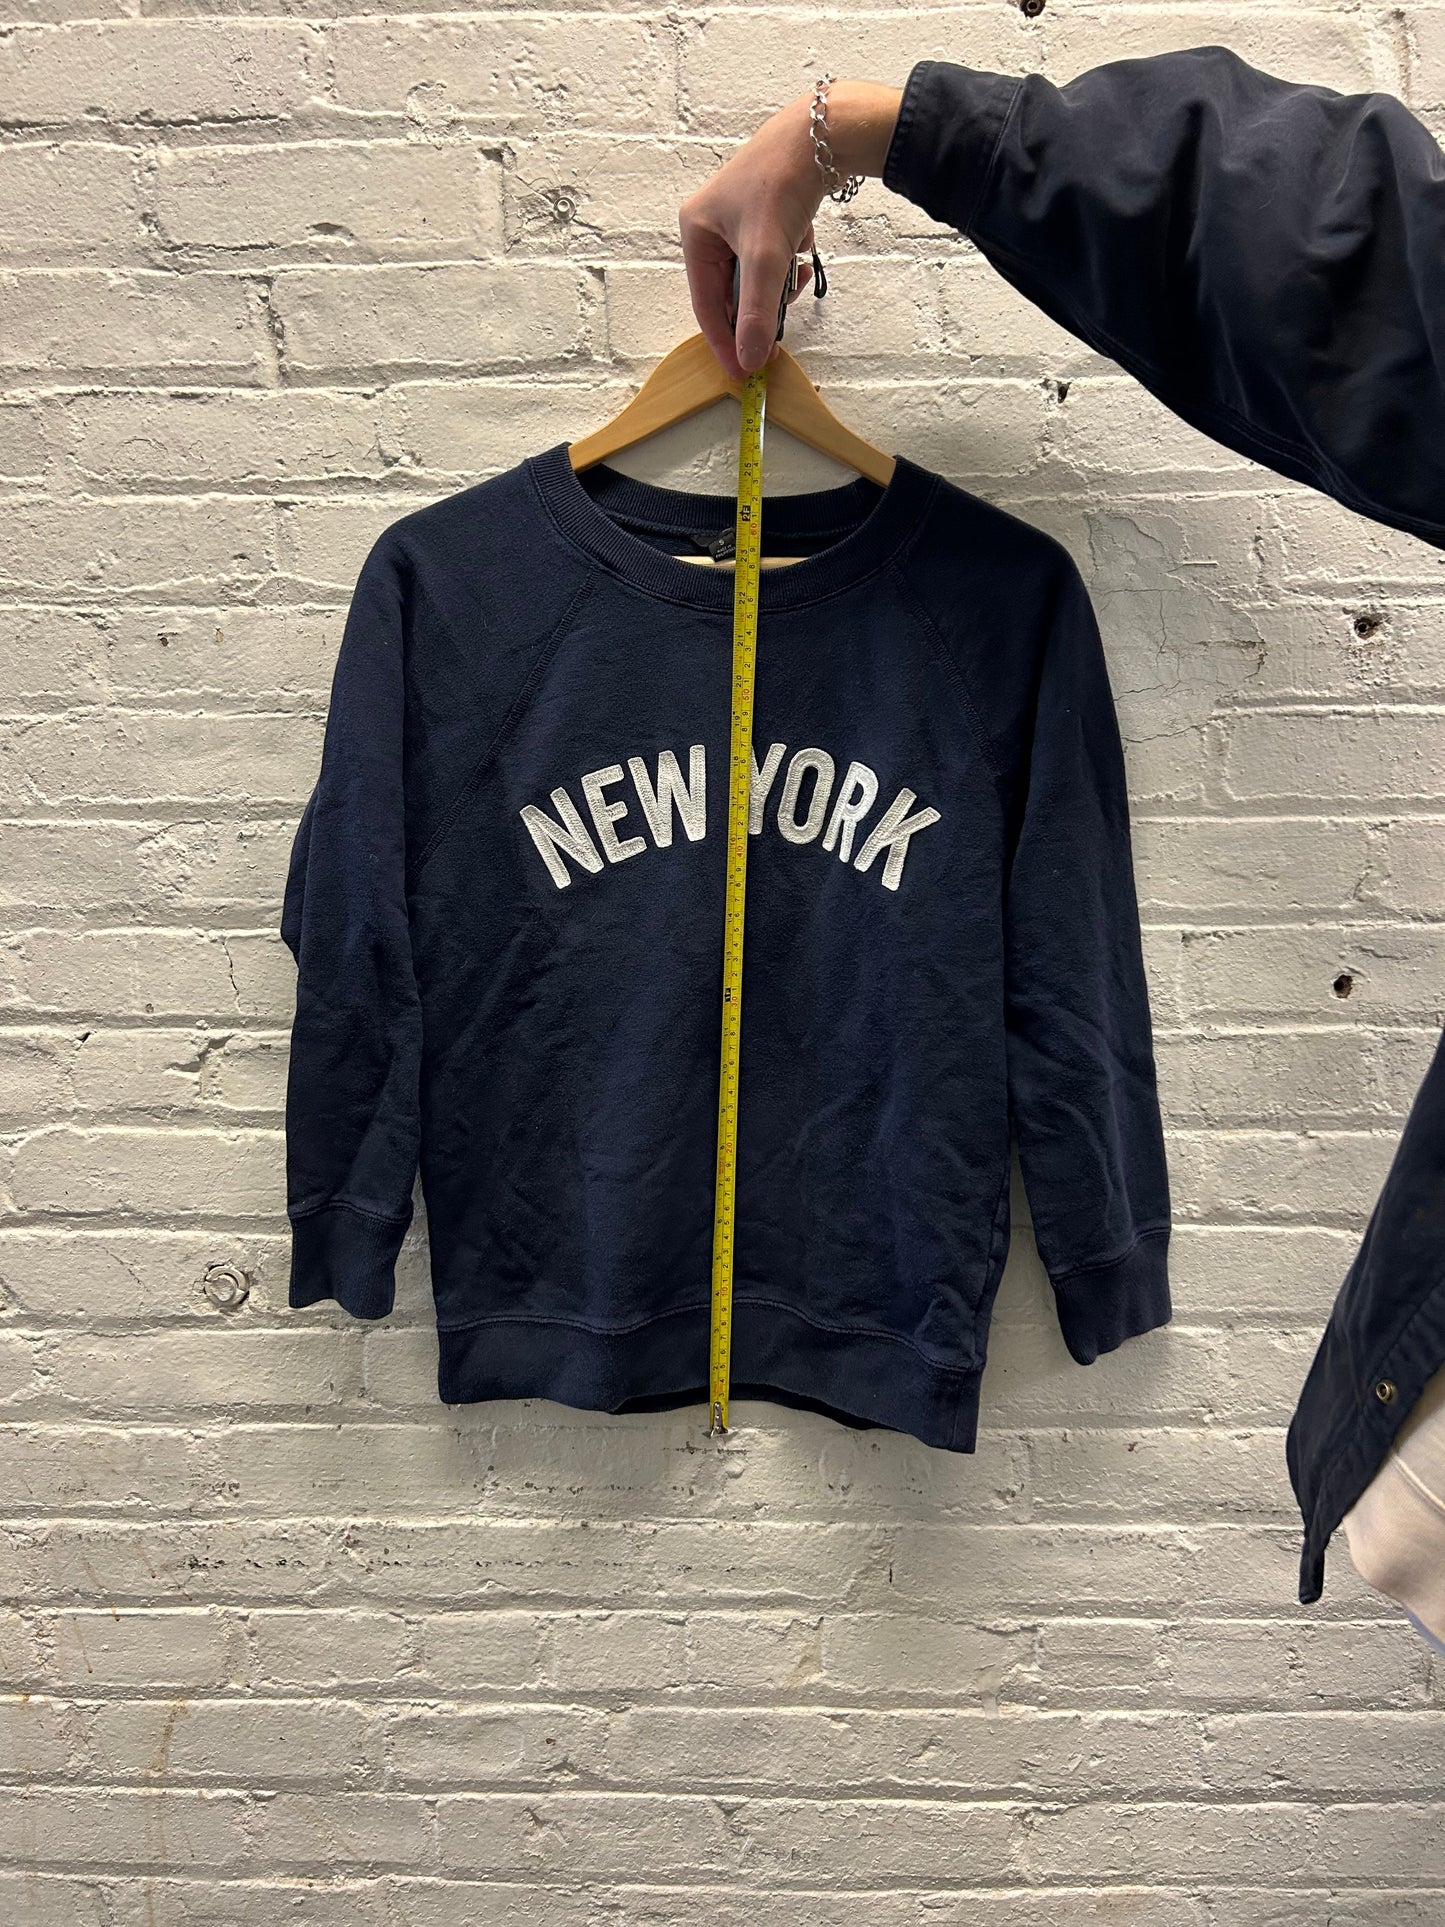 J Crew New York Sweatshirt - Small